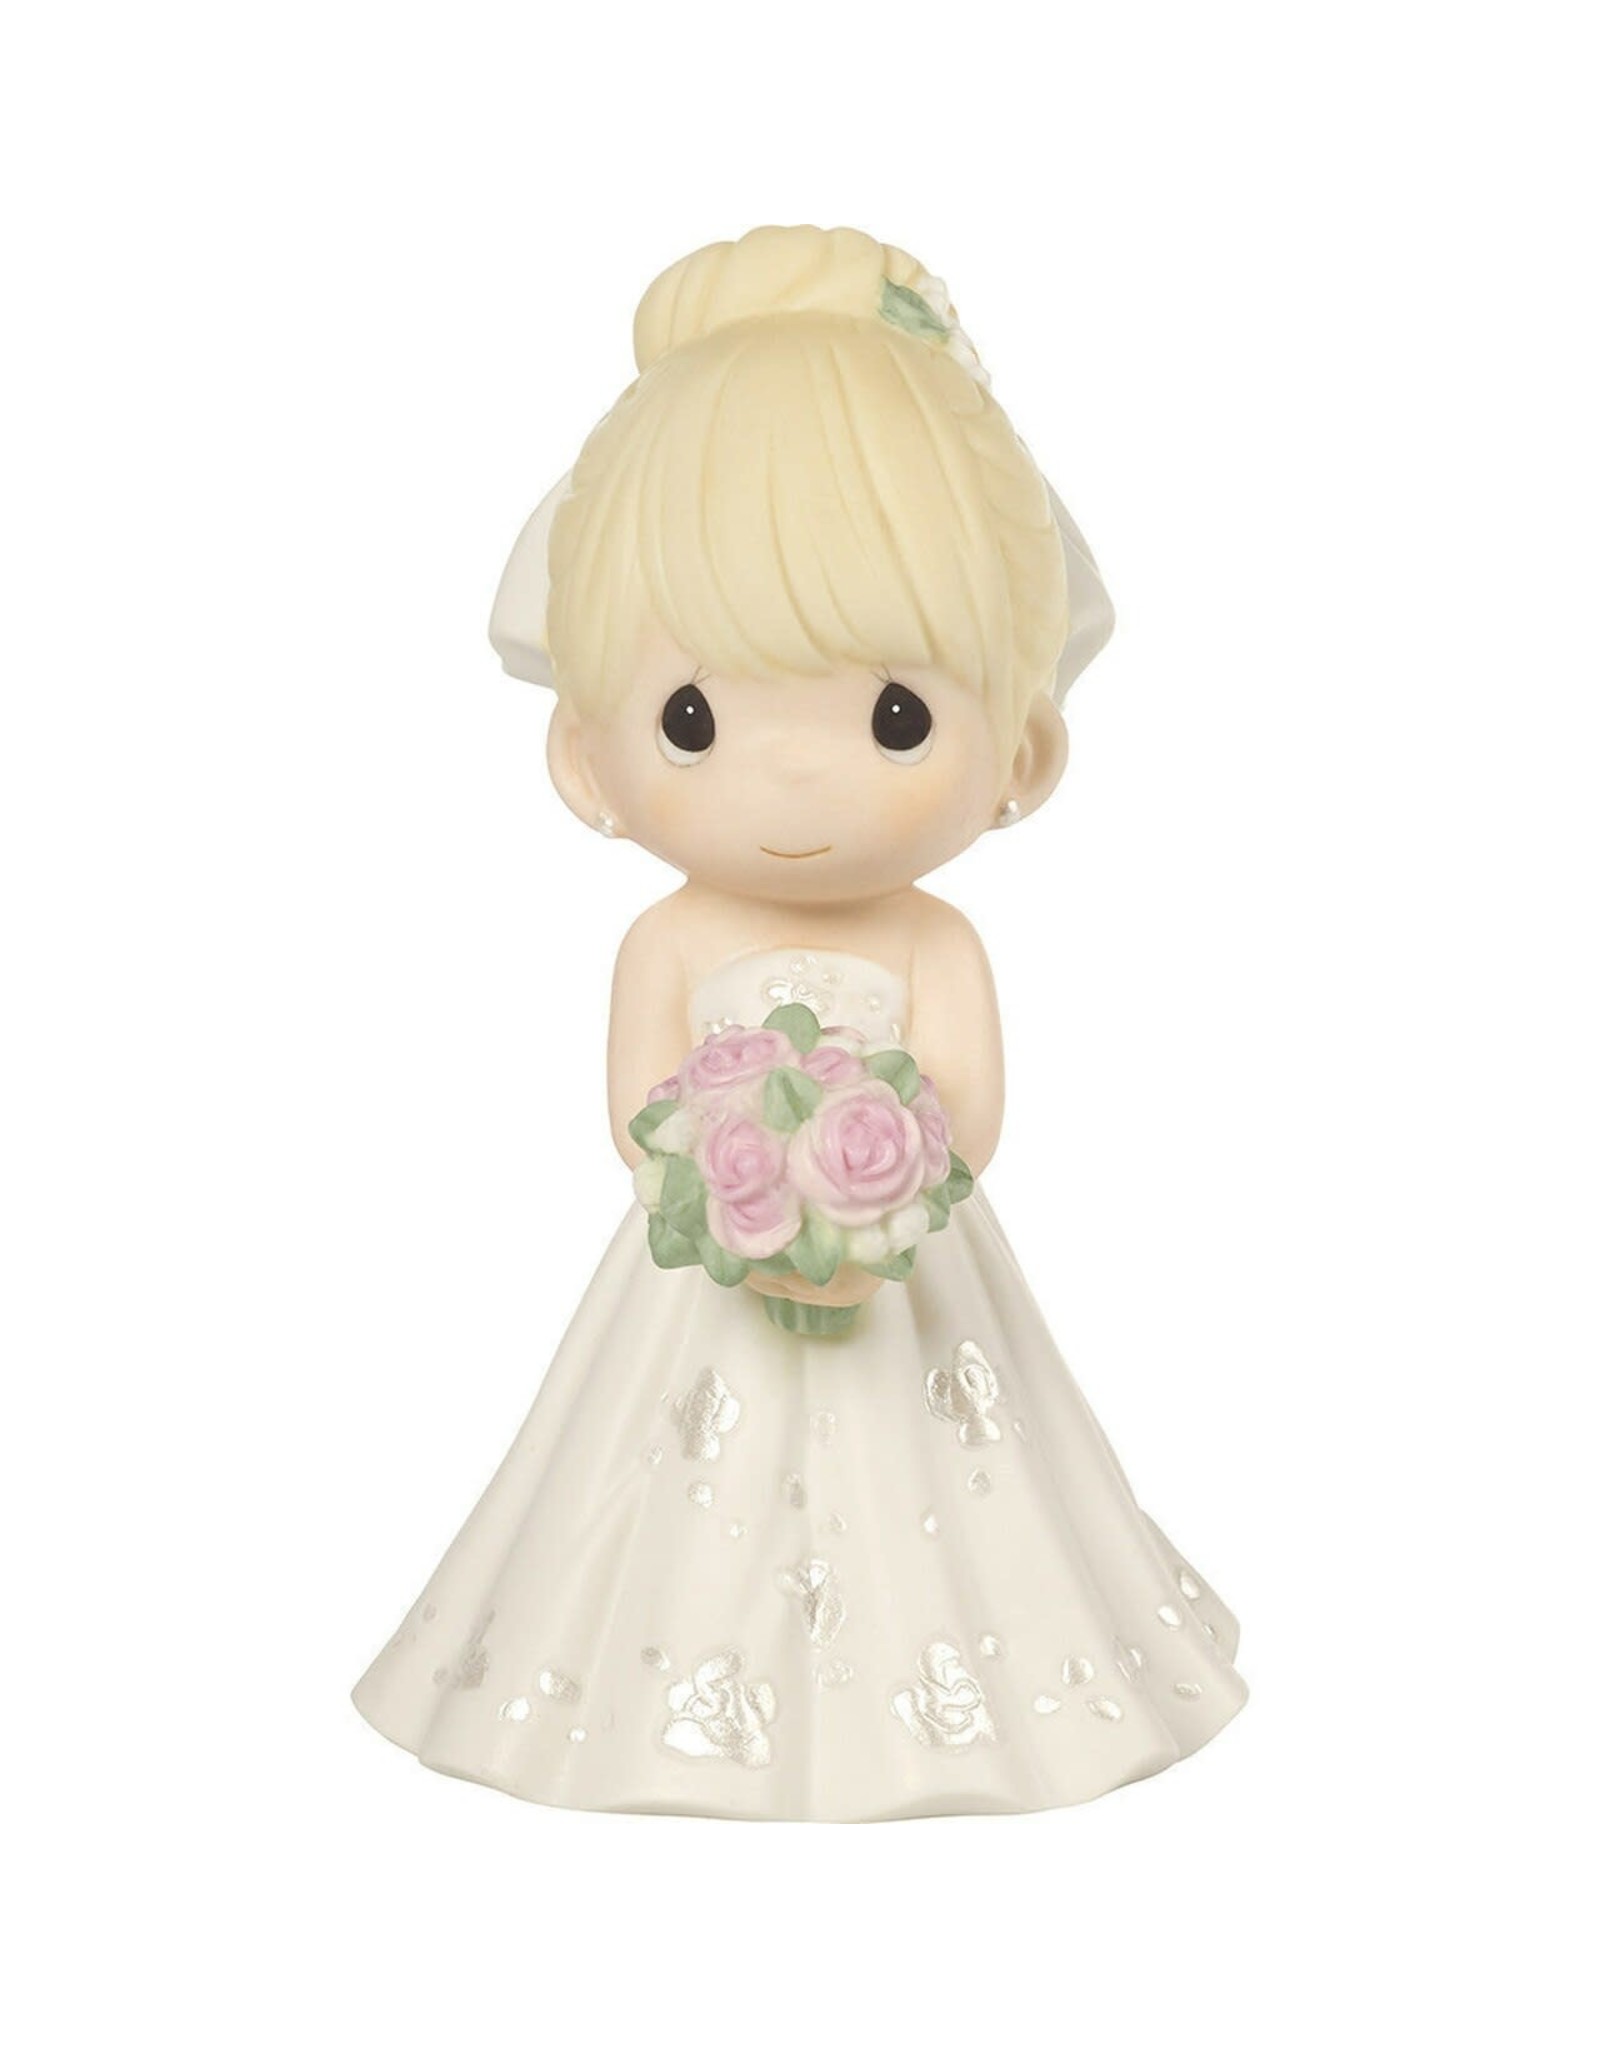 Precious Moments Mix and Match Wedding Cake Topper/Bride Figurine, Blonde Hair, Light Skin Tone, Porcelain